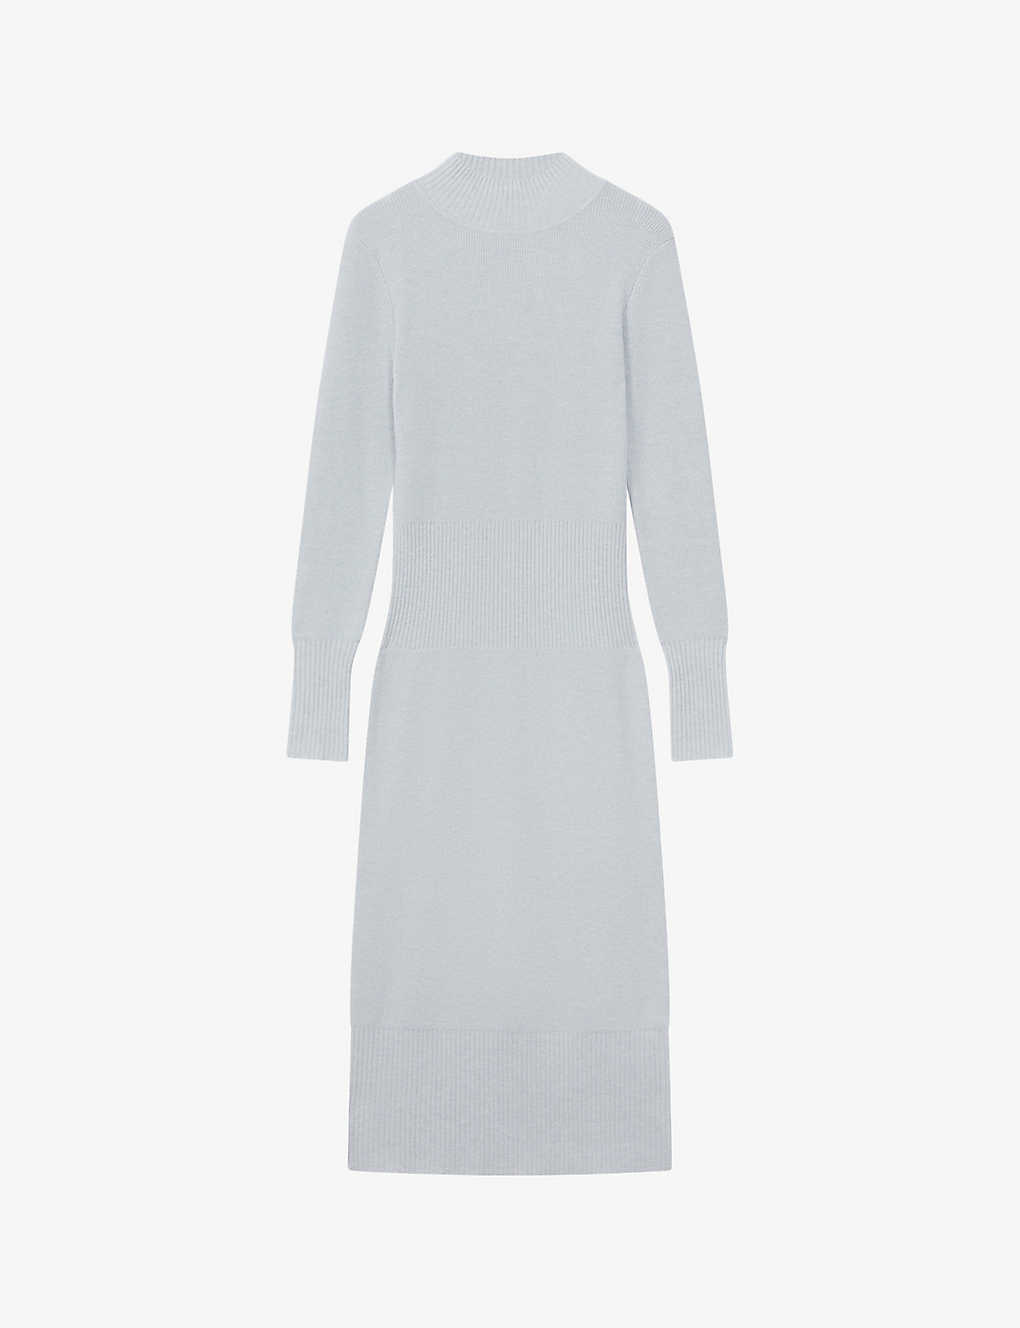 Reiss Mara - Grey Knitted Bodycon Midi Dress, L